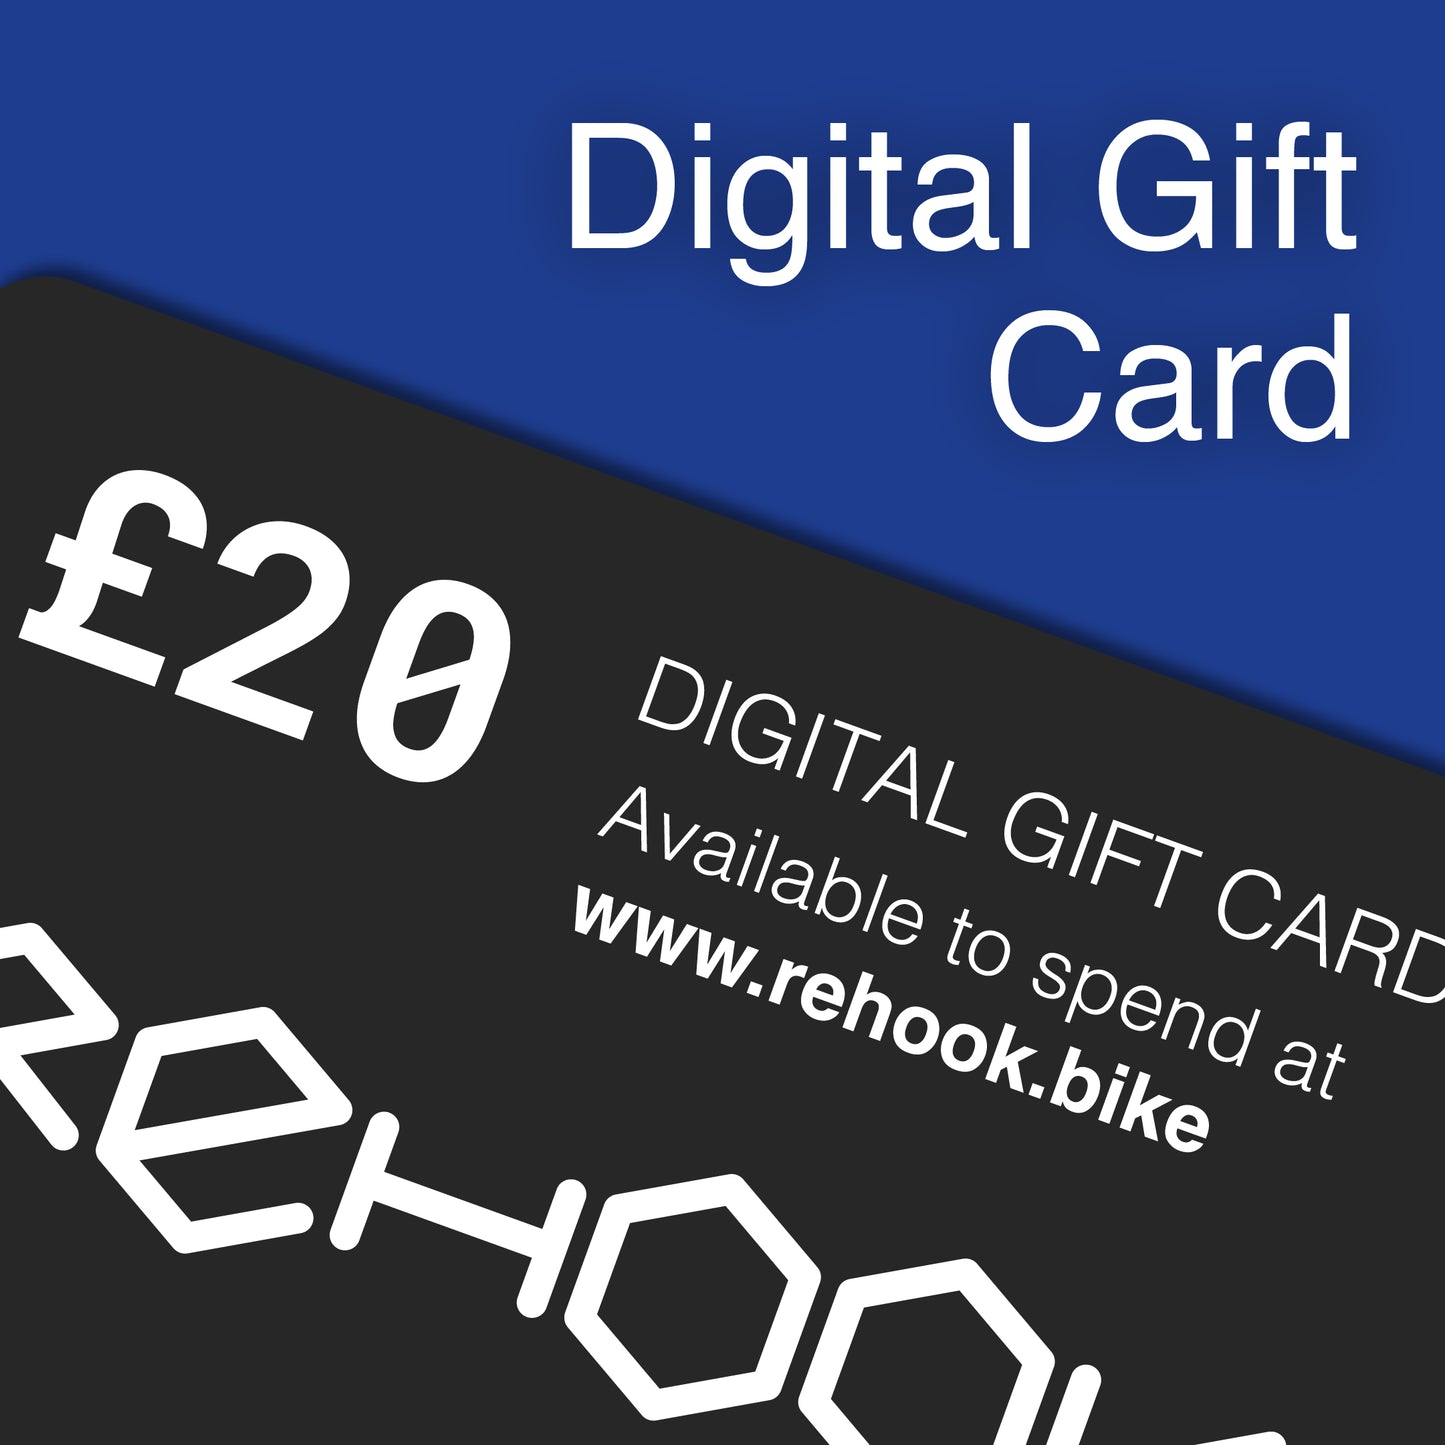 Rehook E-Gift Card